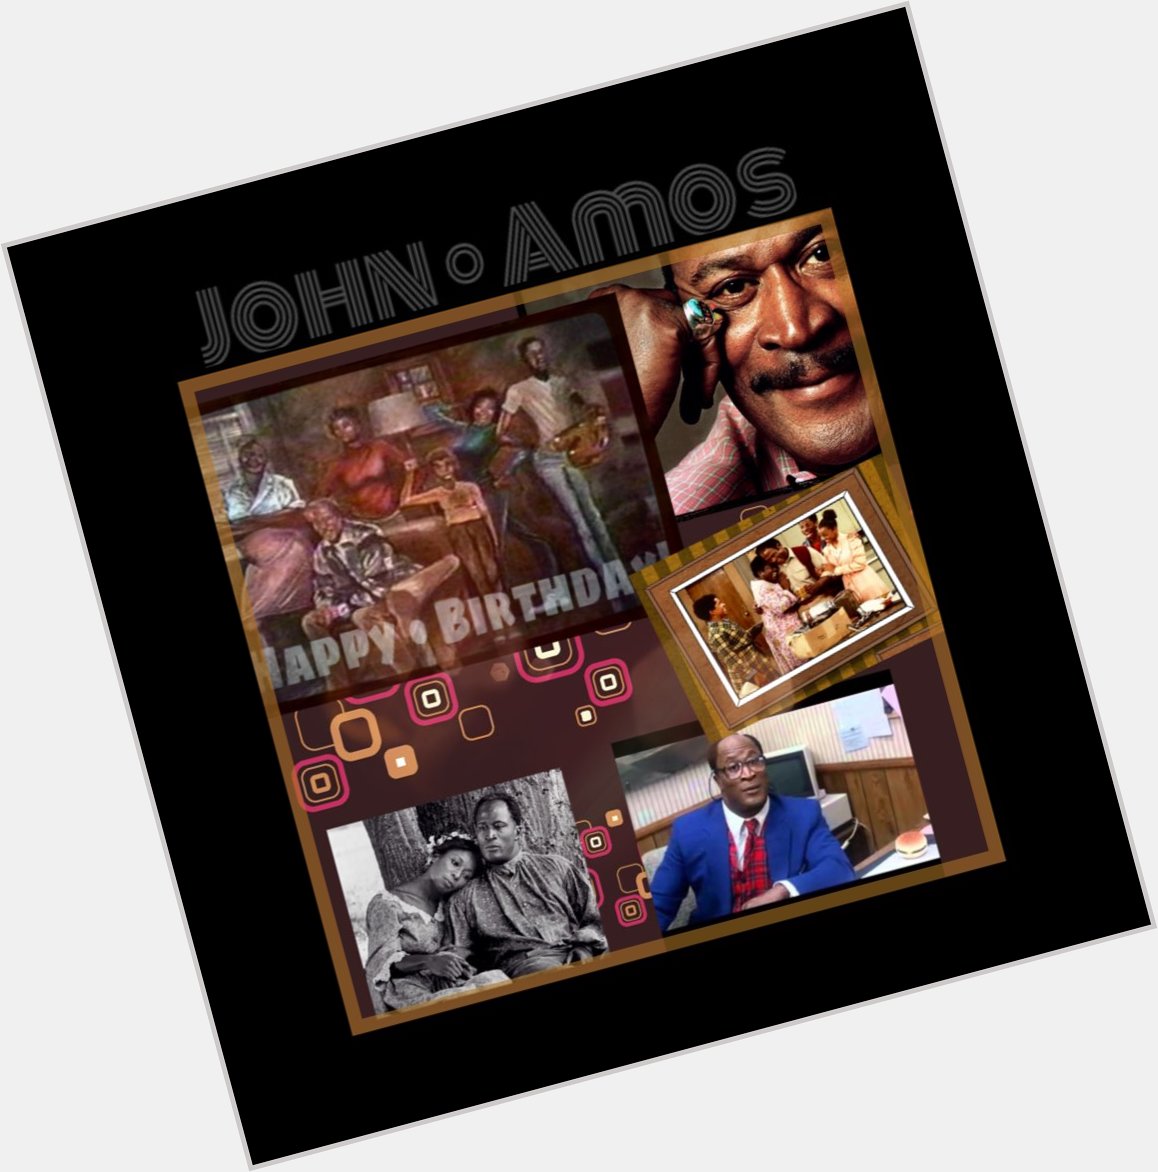     Happy 76th Birthday Mr John Amos! Has so many kind FANS w/ best wishes!    